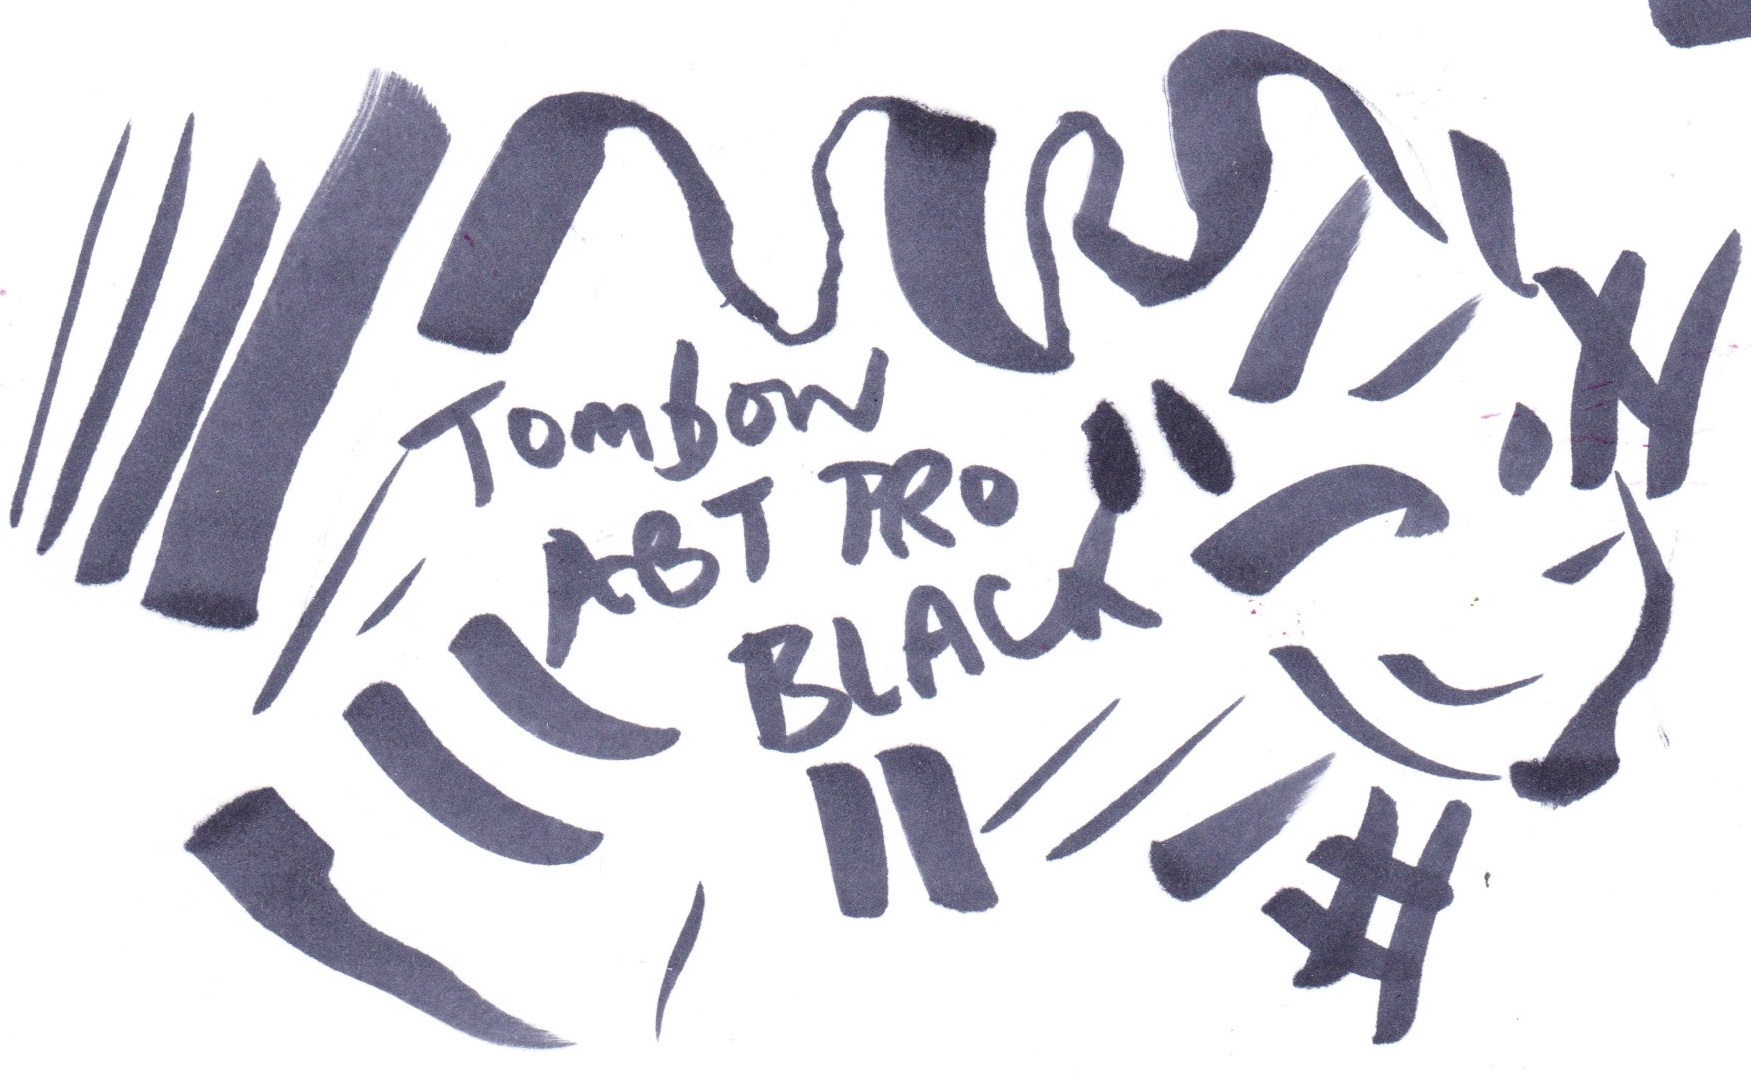 Tombow ABT Pro Alcohol Based Marker Pen PN15 Black on Bristol board